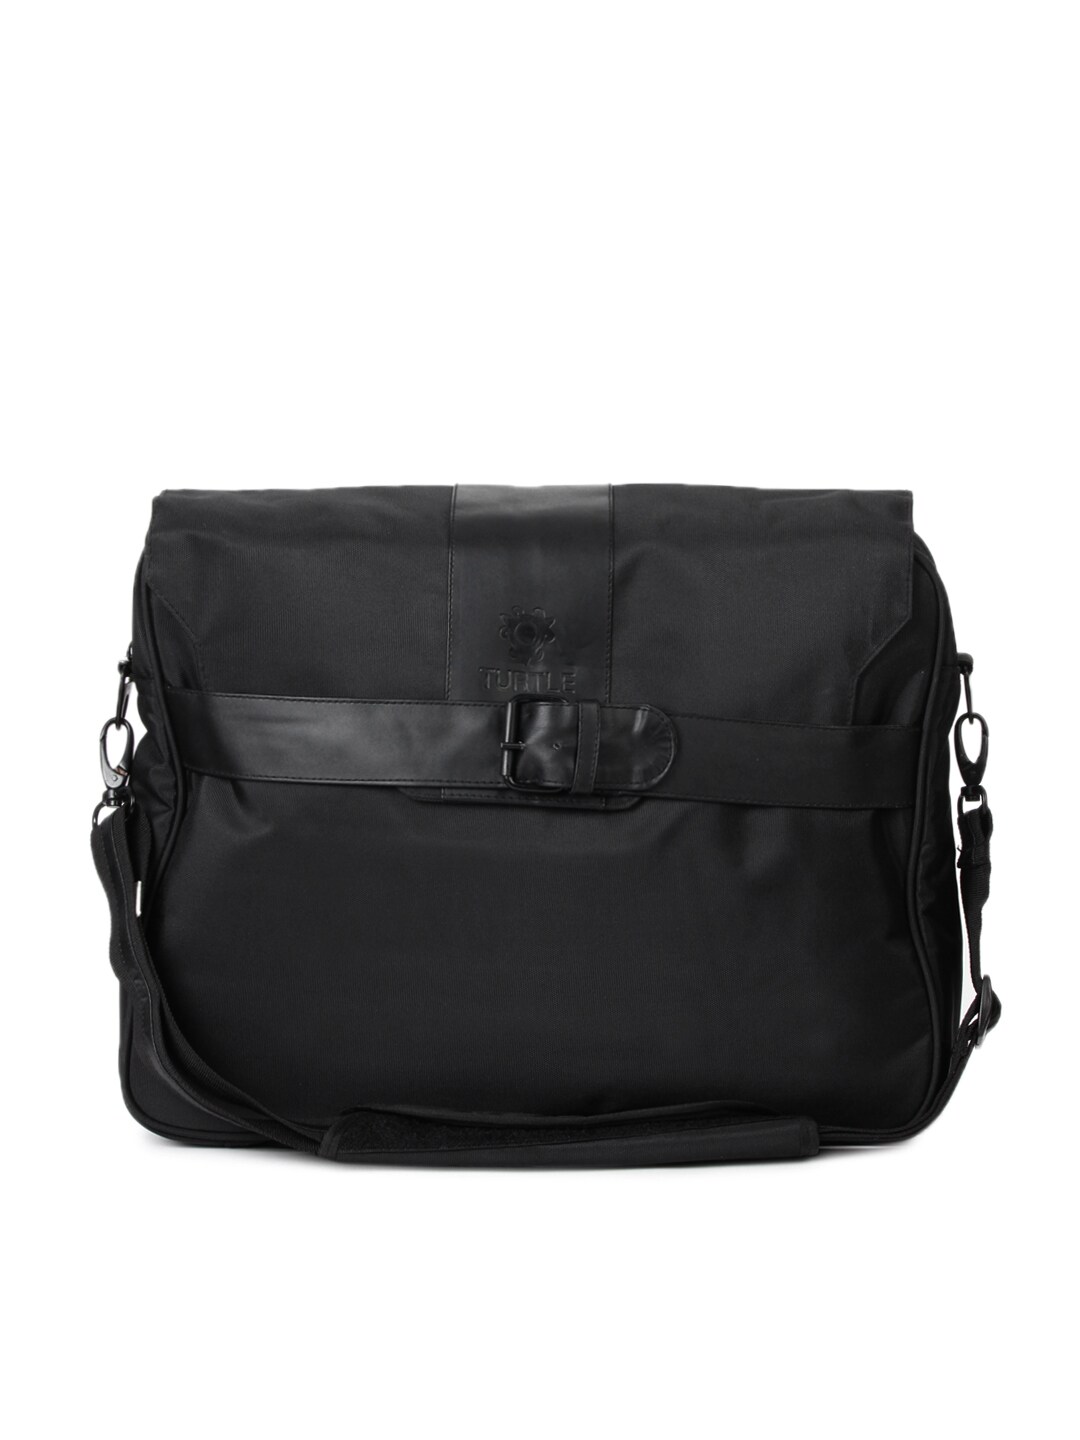 Turtle Unisex Black Laptop Bag